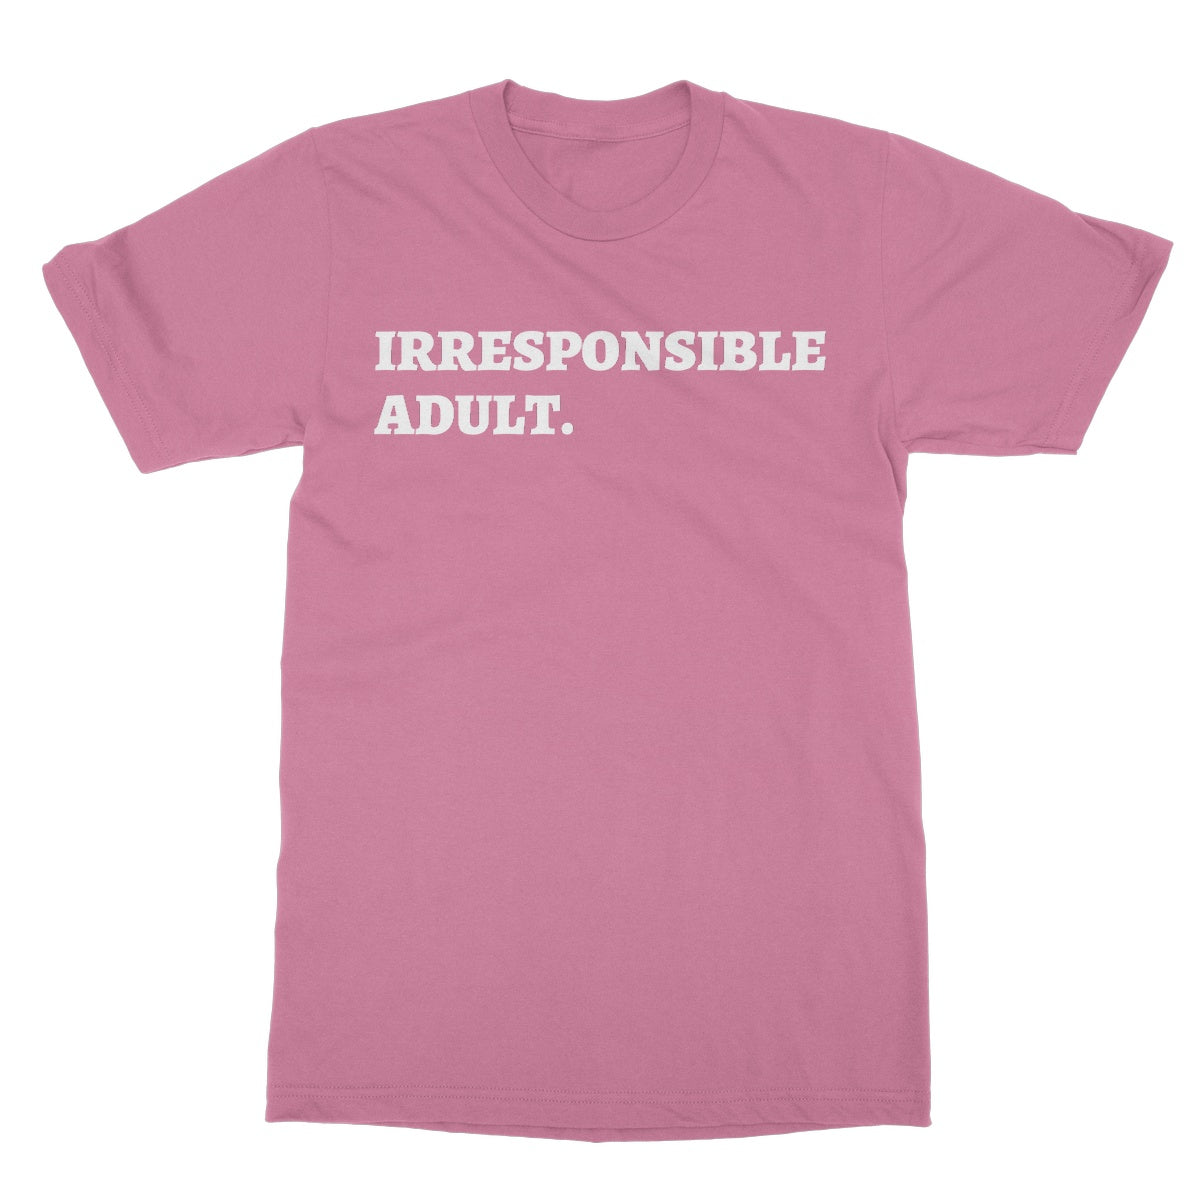 irresponsible adult t shirt pink